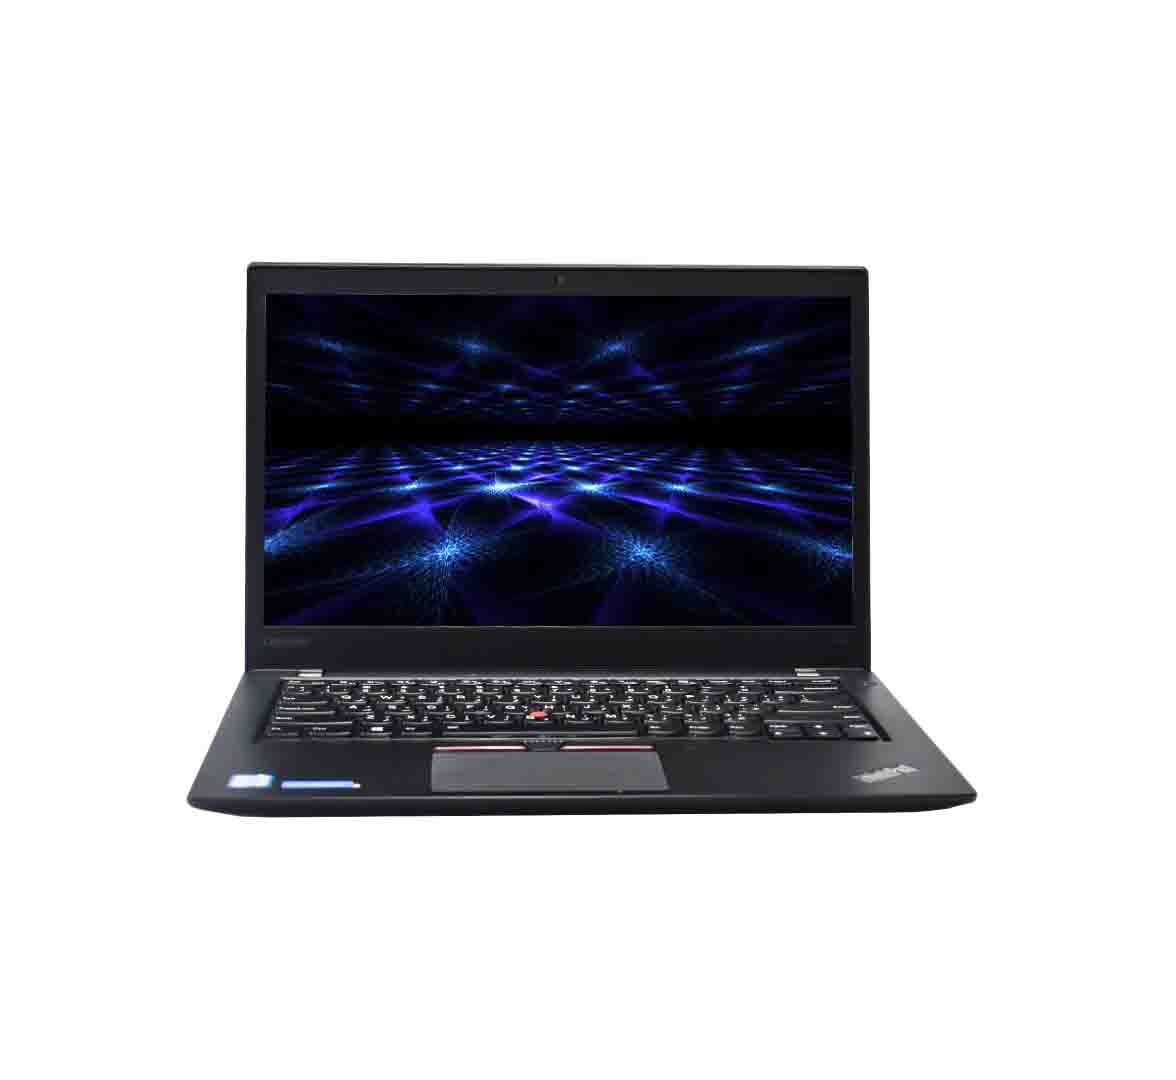 Lenovo Thinkpad T460s Ultrabook Laptop, Intel Core i5-6th Gen CPU, 16GB RAM, 512GB SSD, 14.1 inch Display, Win 10 Pro, Refurbished Laptop